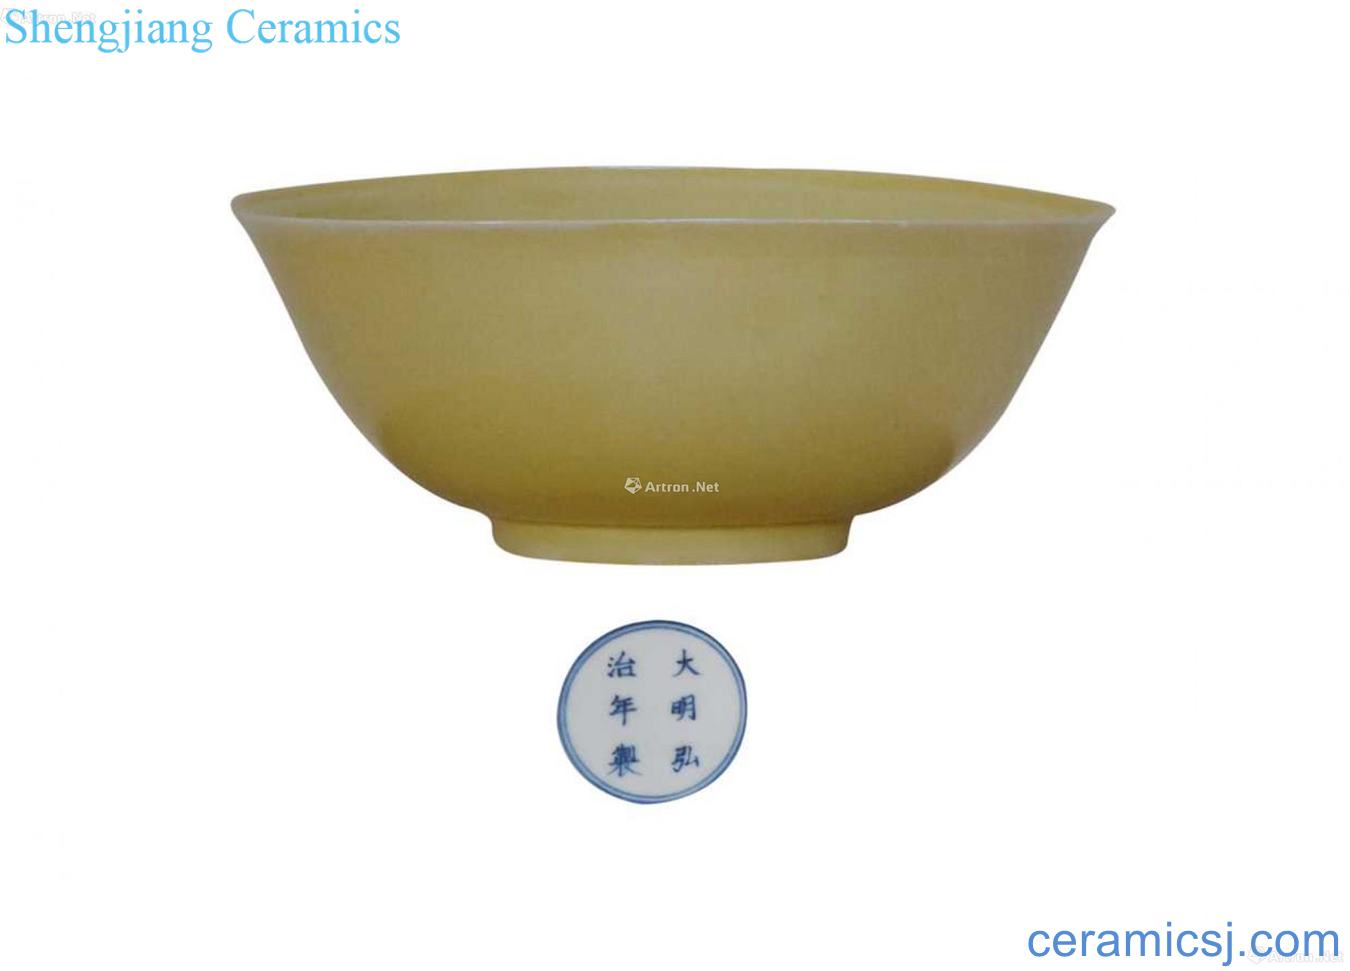 Jiao yellow glaze bowls